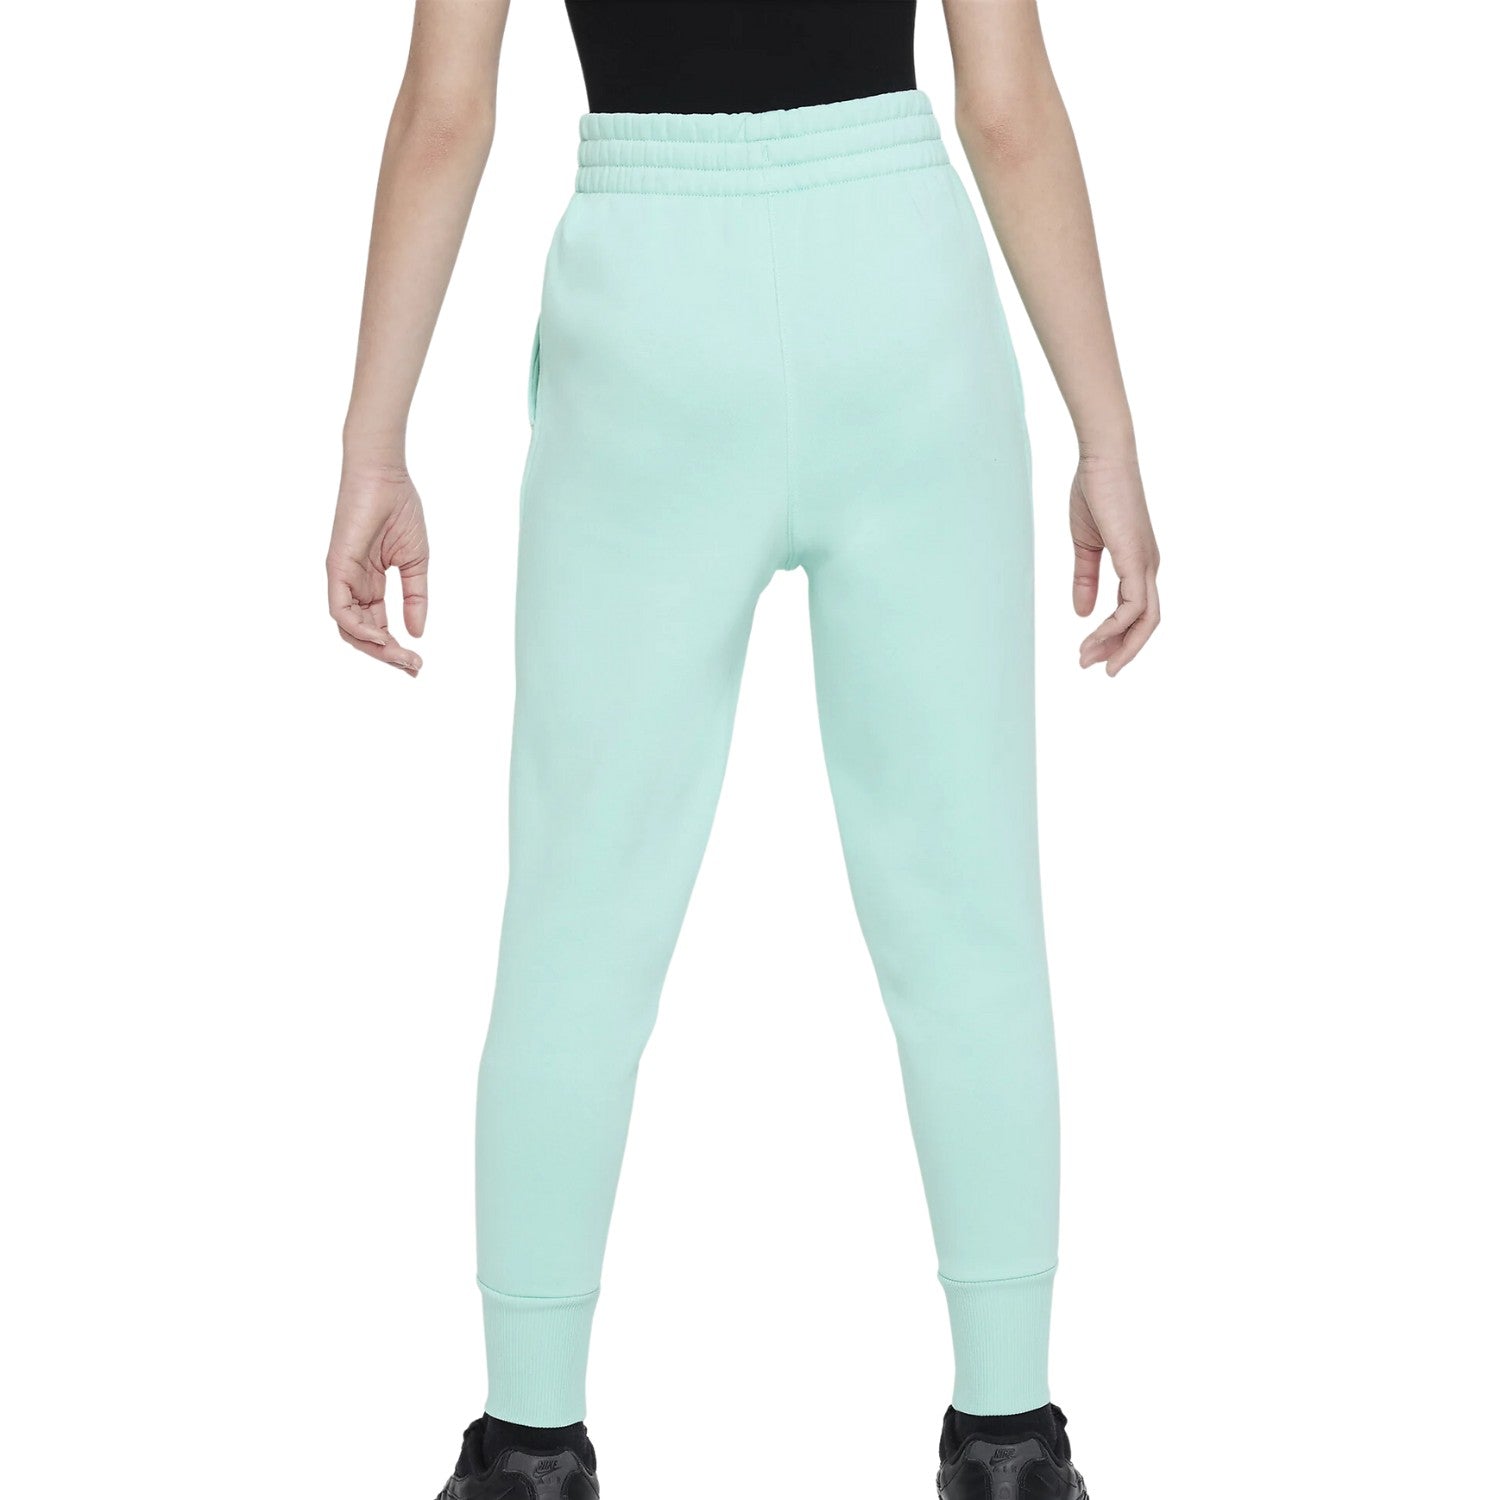 Nike Sportswear Club Fleece Big Kids' (Girls') High-waisted Fitted Pants Big Kids Style : Fd2921